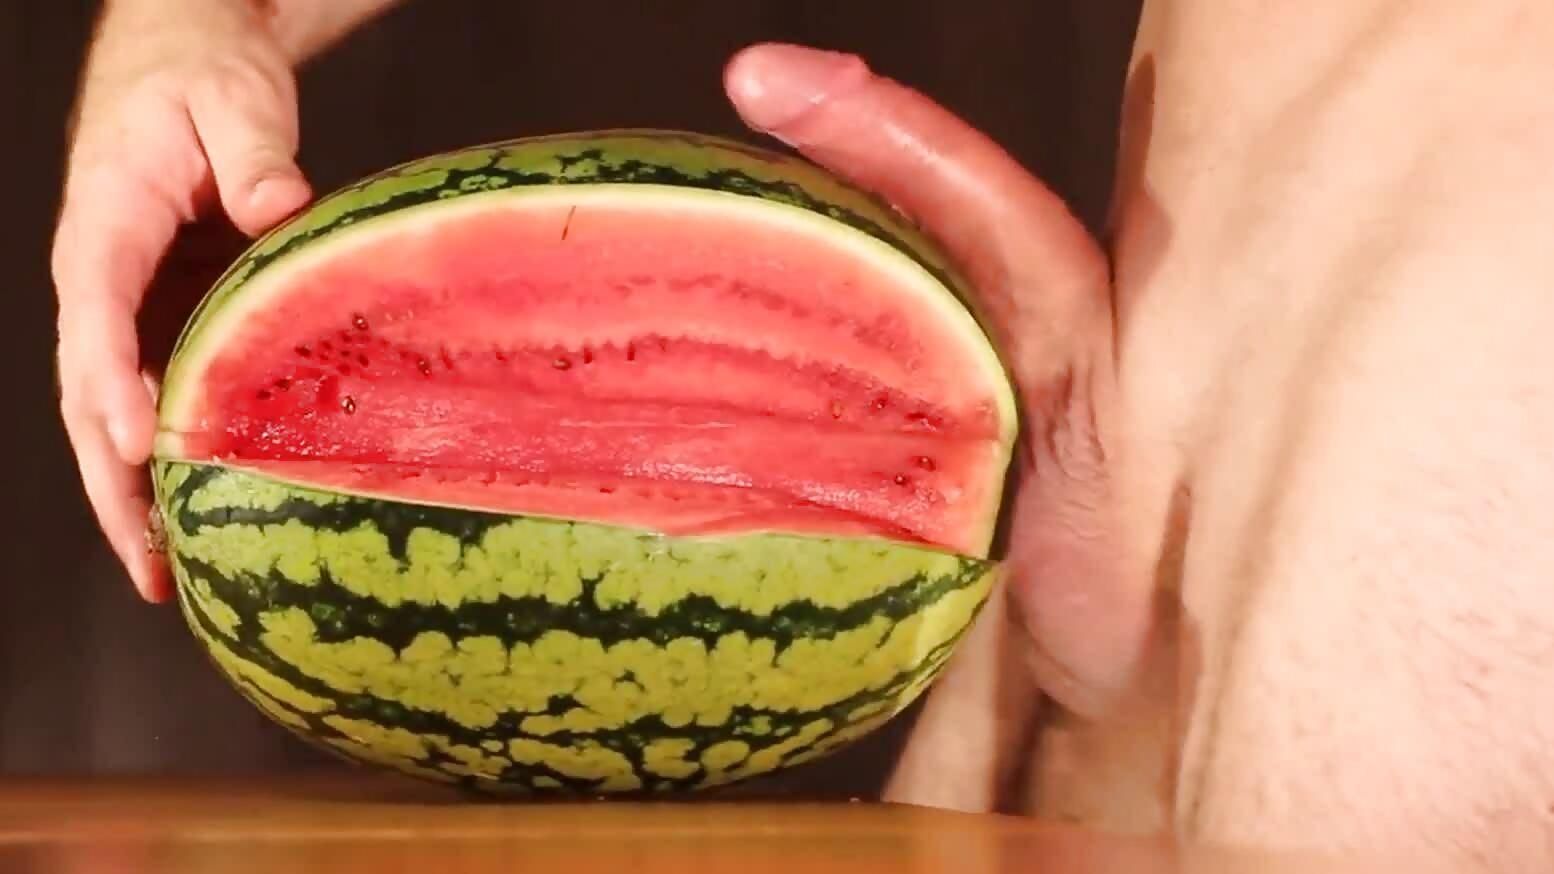 Watermelon Cum - Fucking a Melon and Cumming